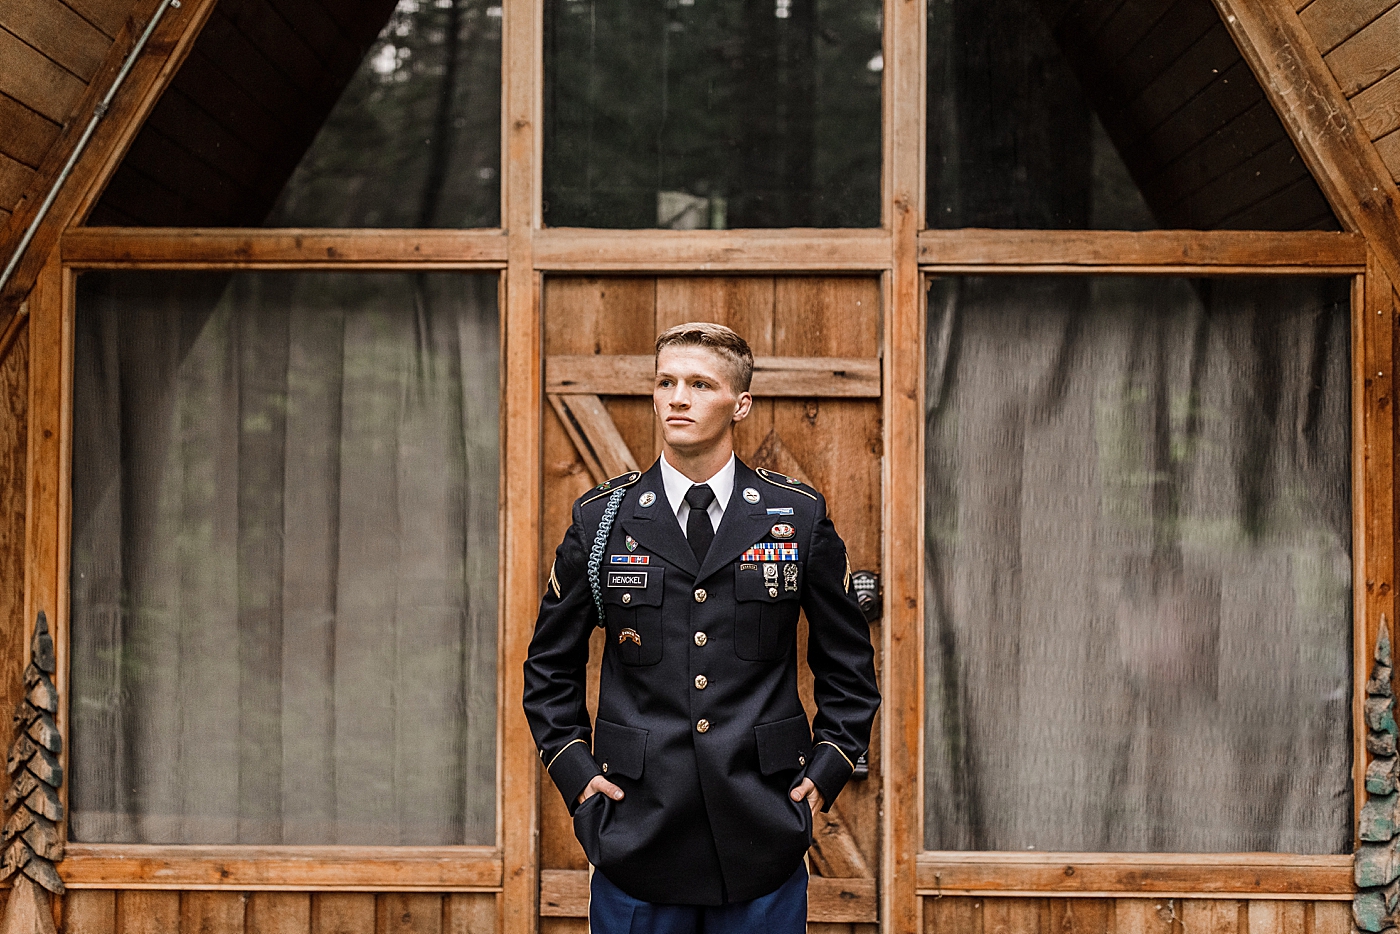 Groom wearing Army uniform for Elopement | Megan Montalvo Photography